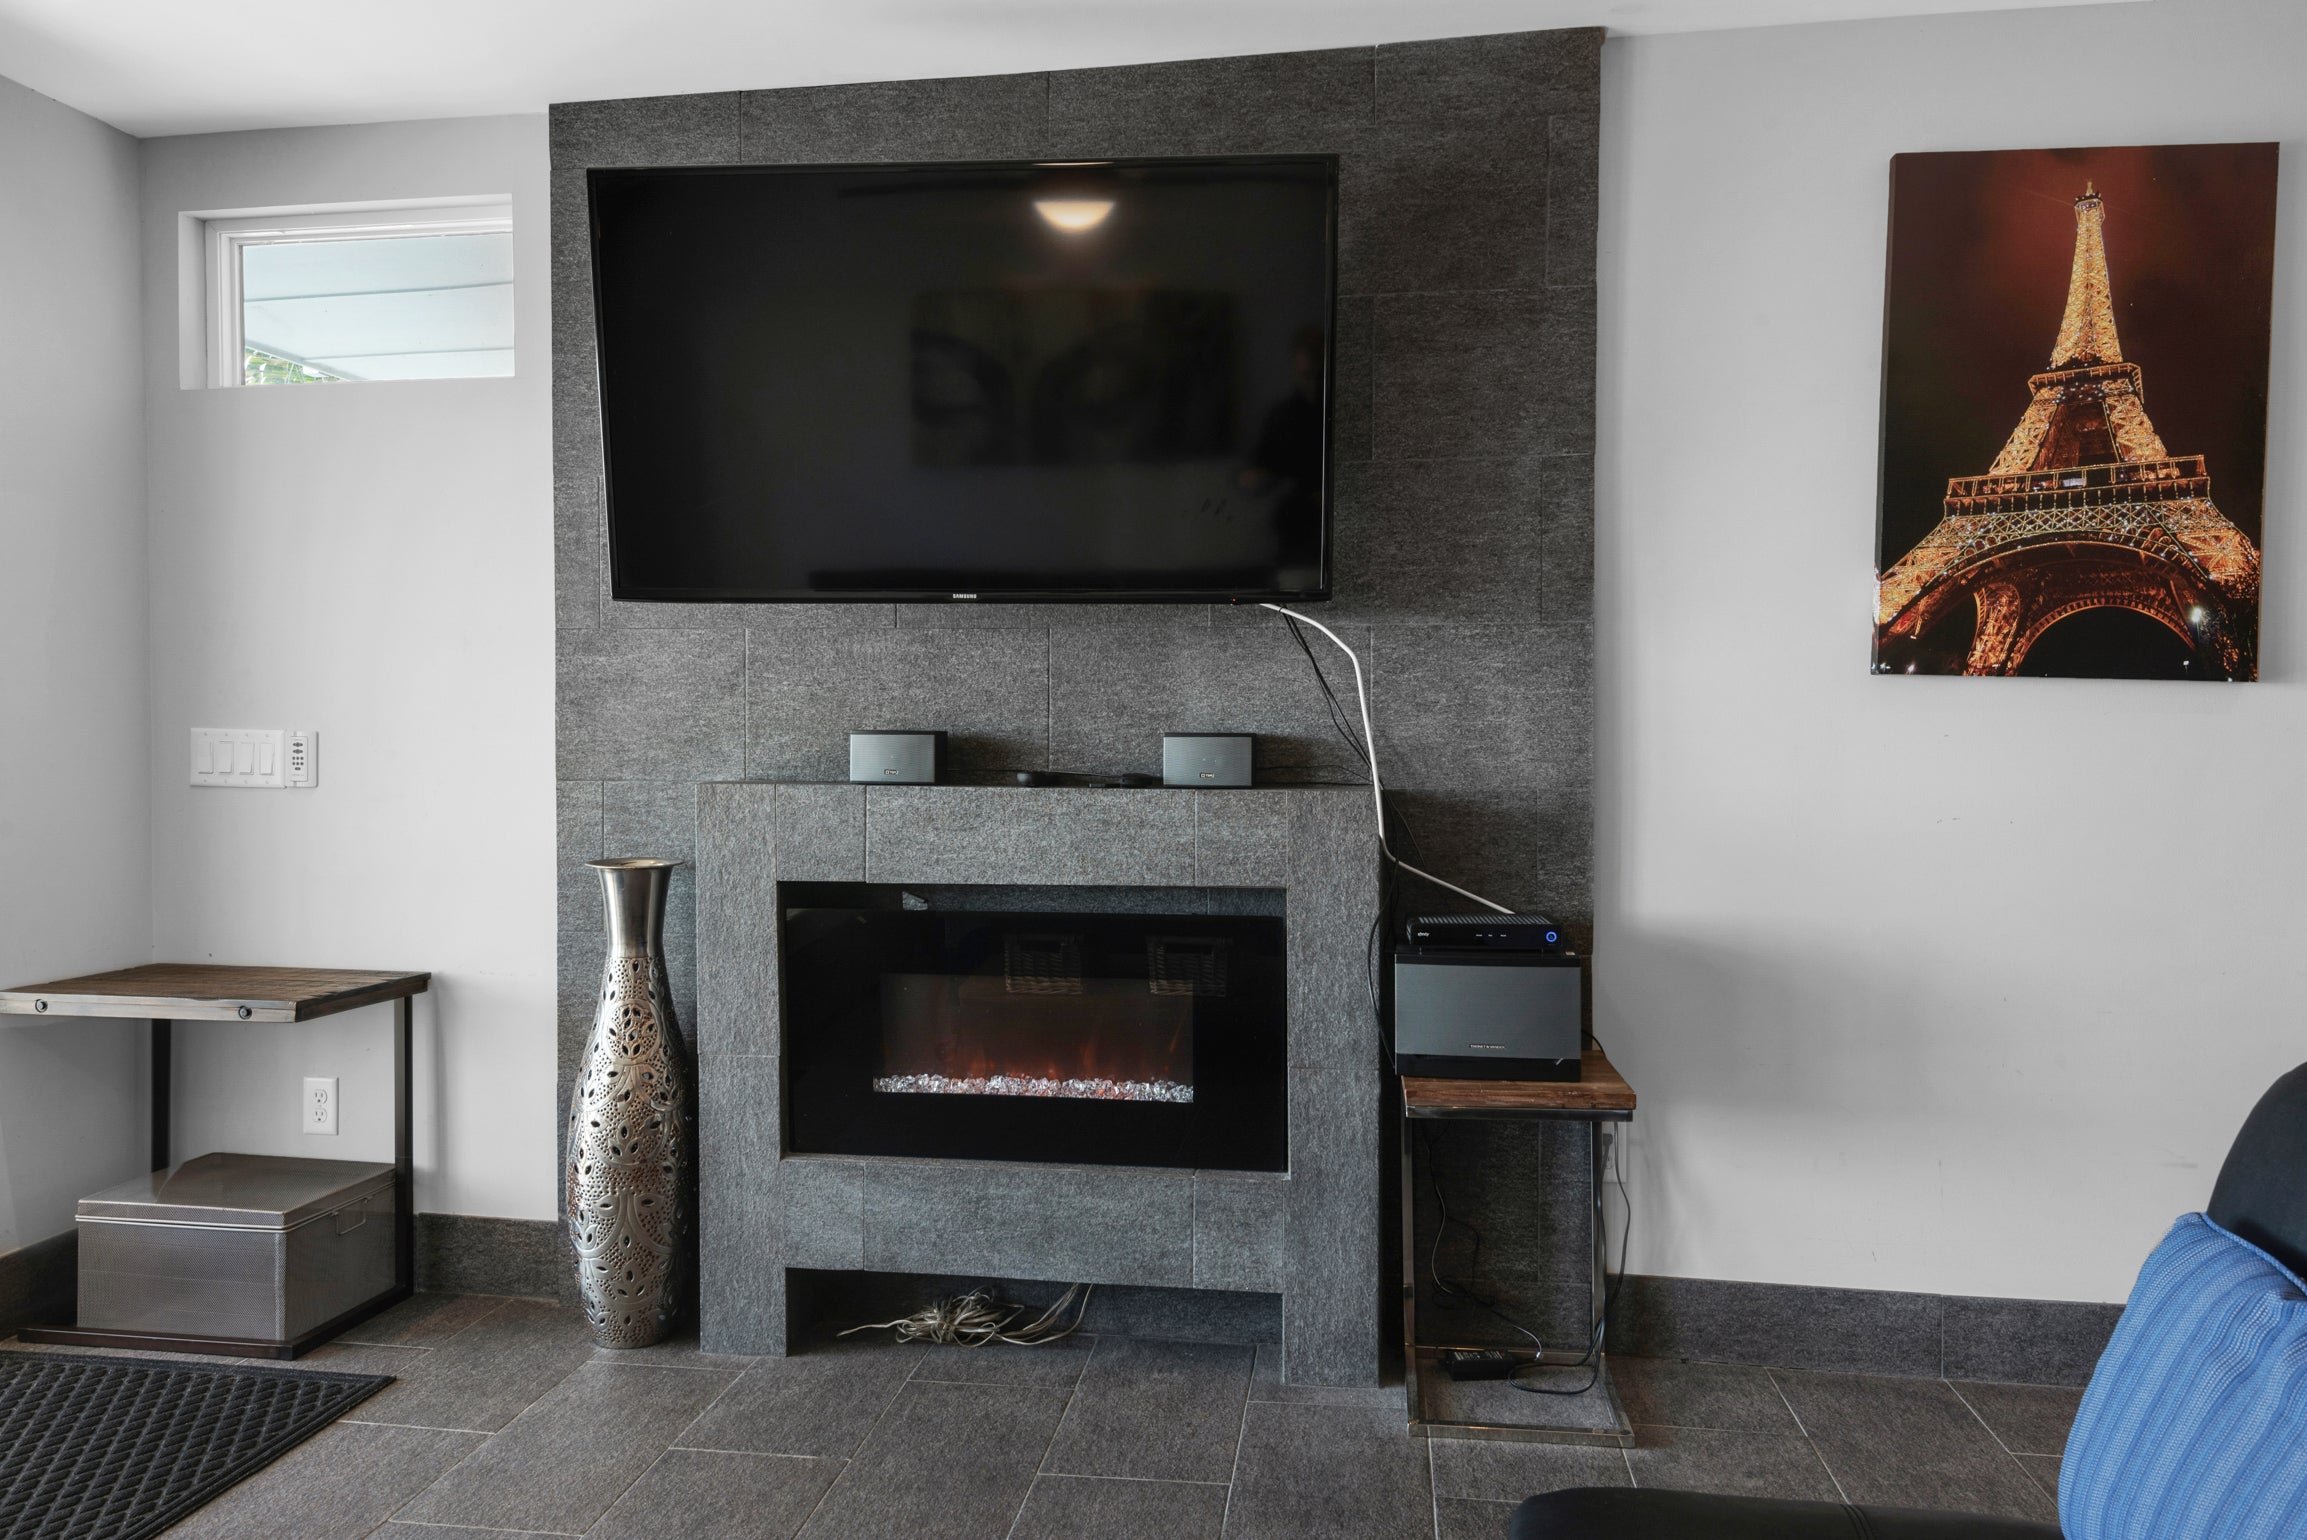 Beautiful fireplace and large flat screen TV!